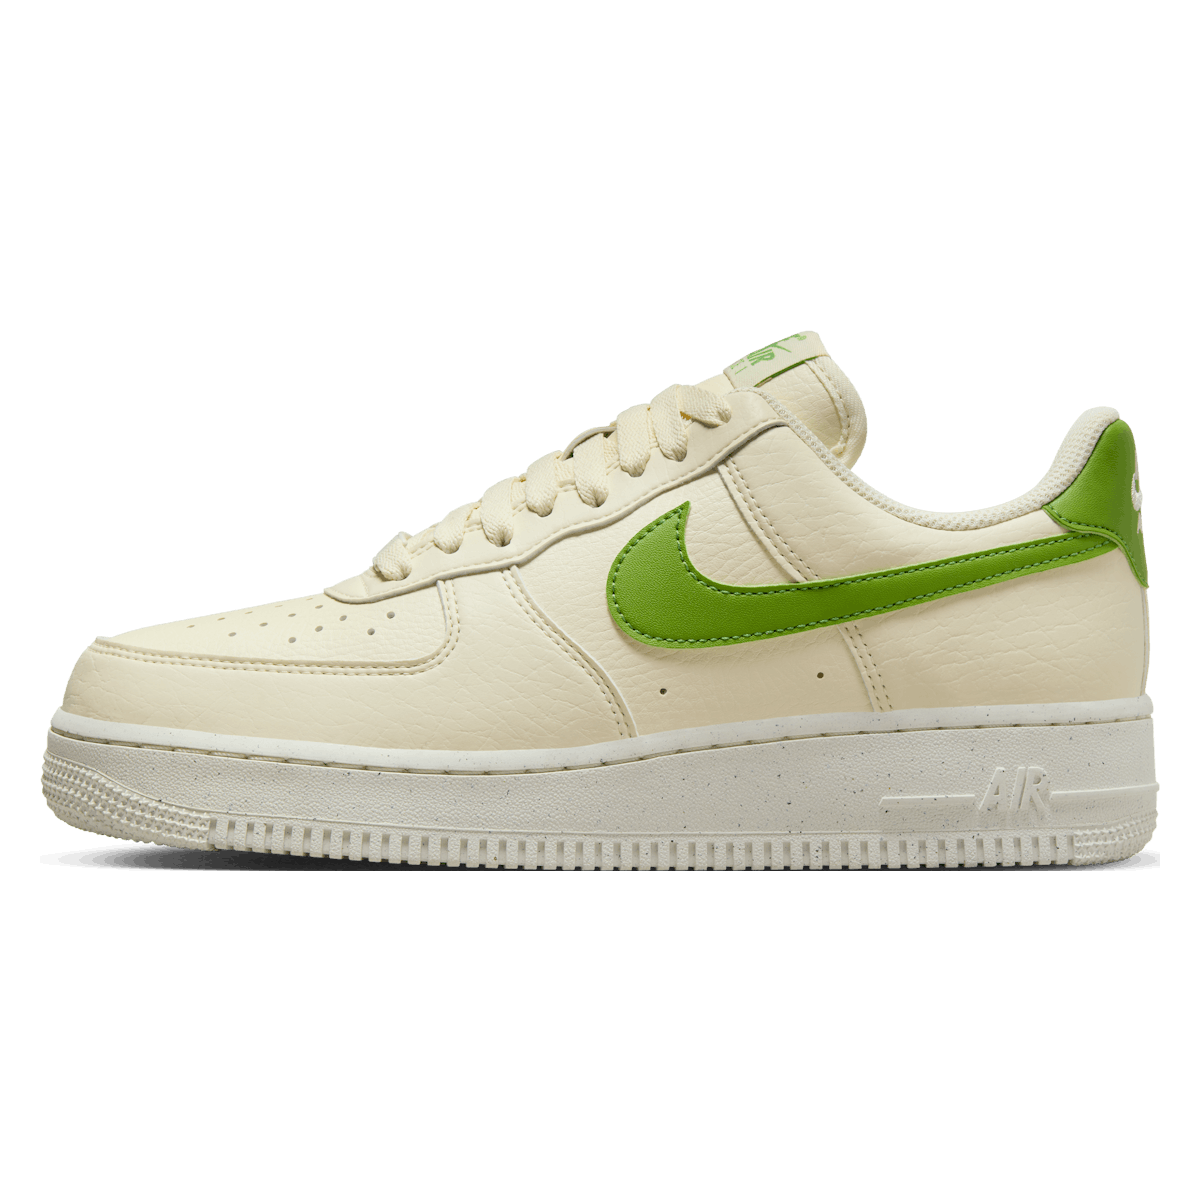 Nike Air Force 1 '07 Wmns "Chlorophyll"